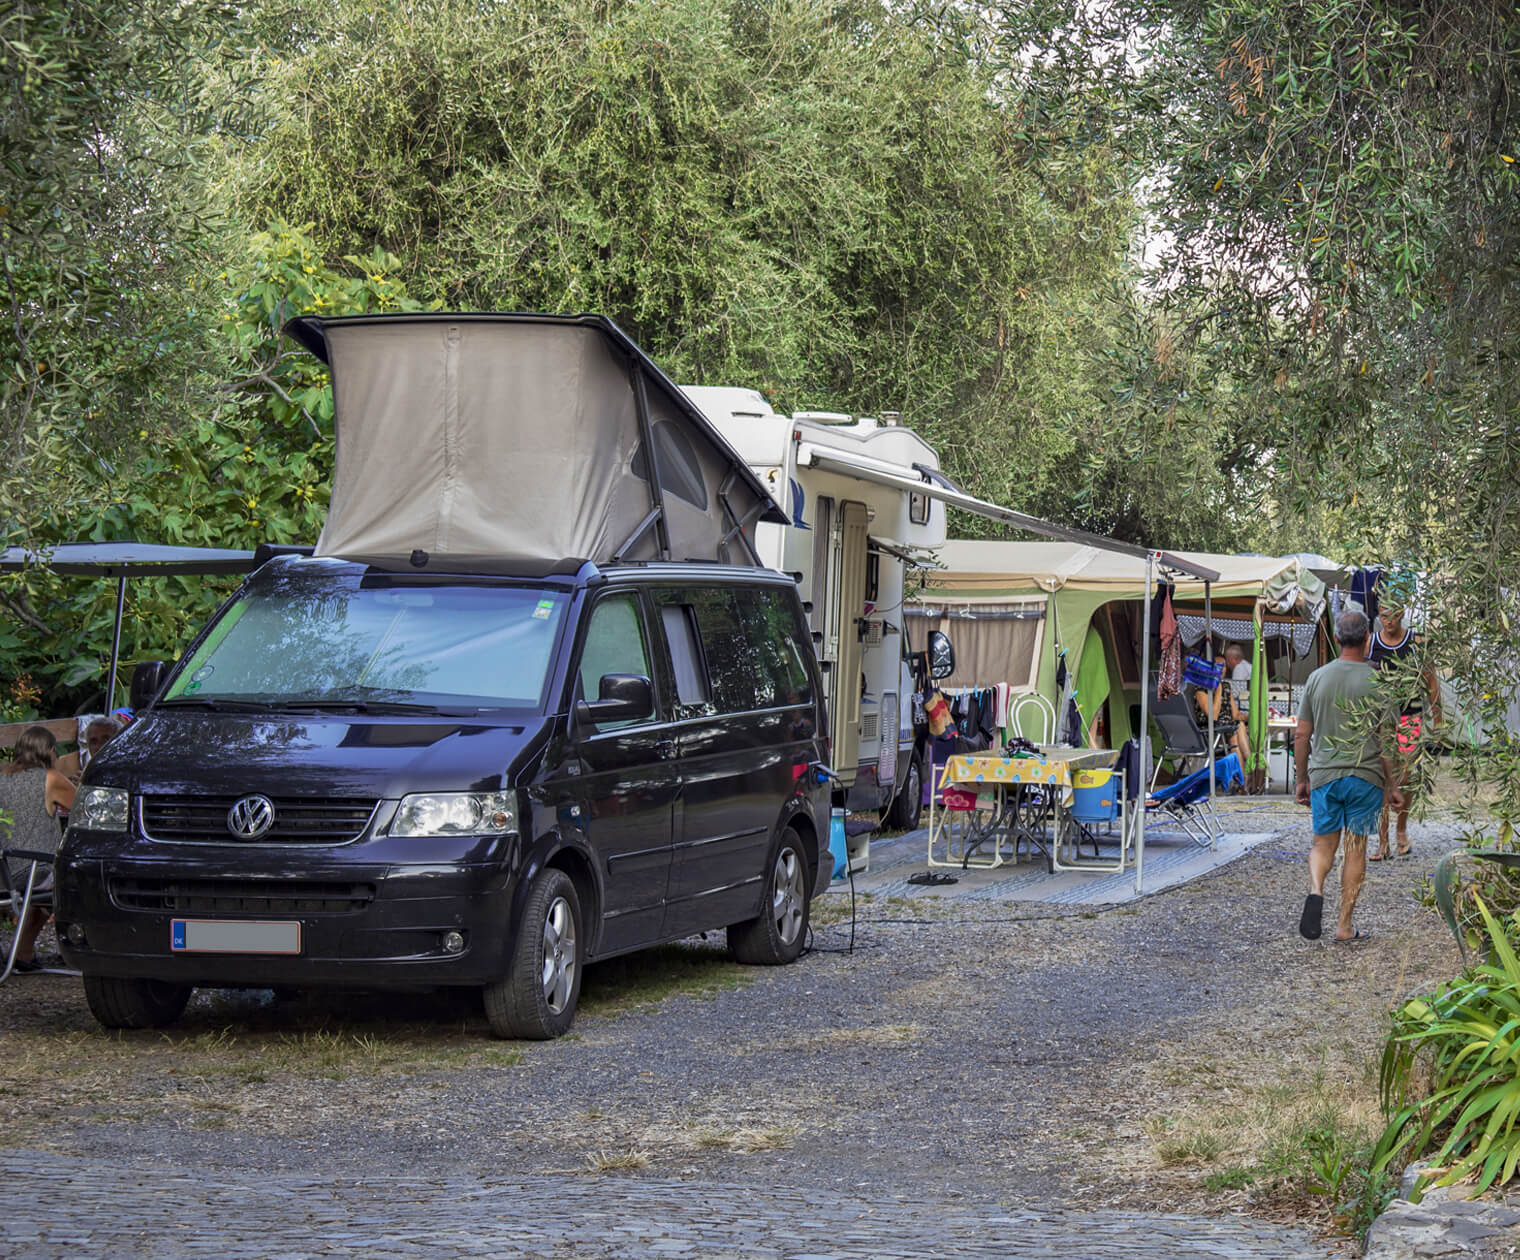 Pitches for camper vans and caravans